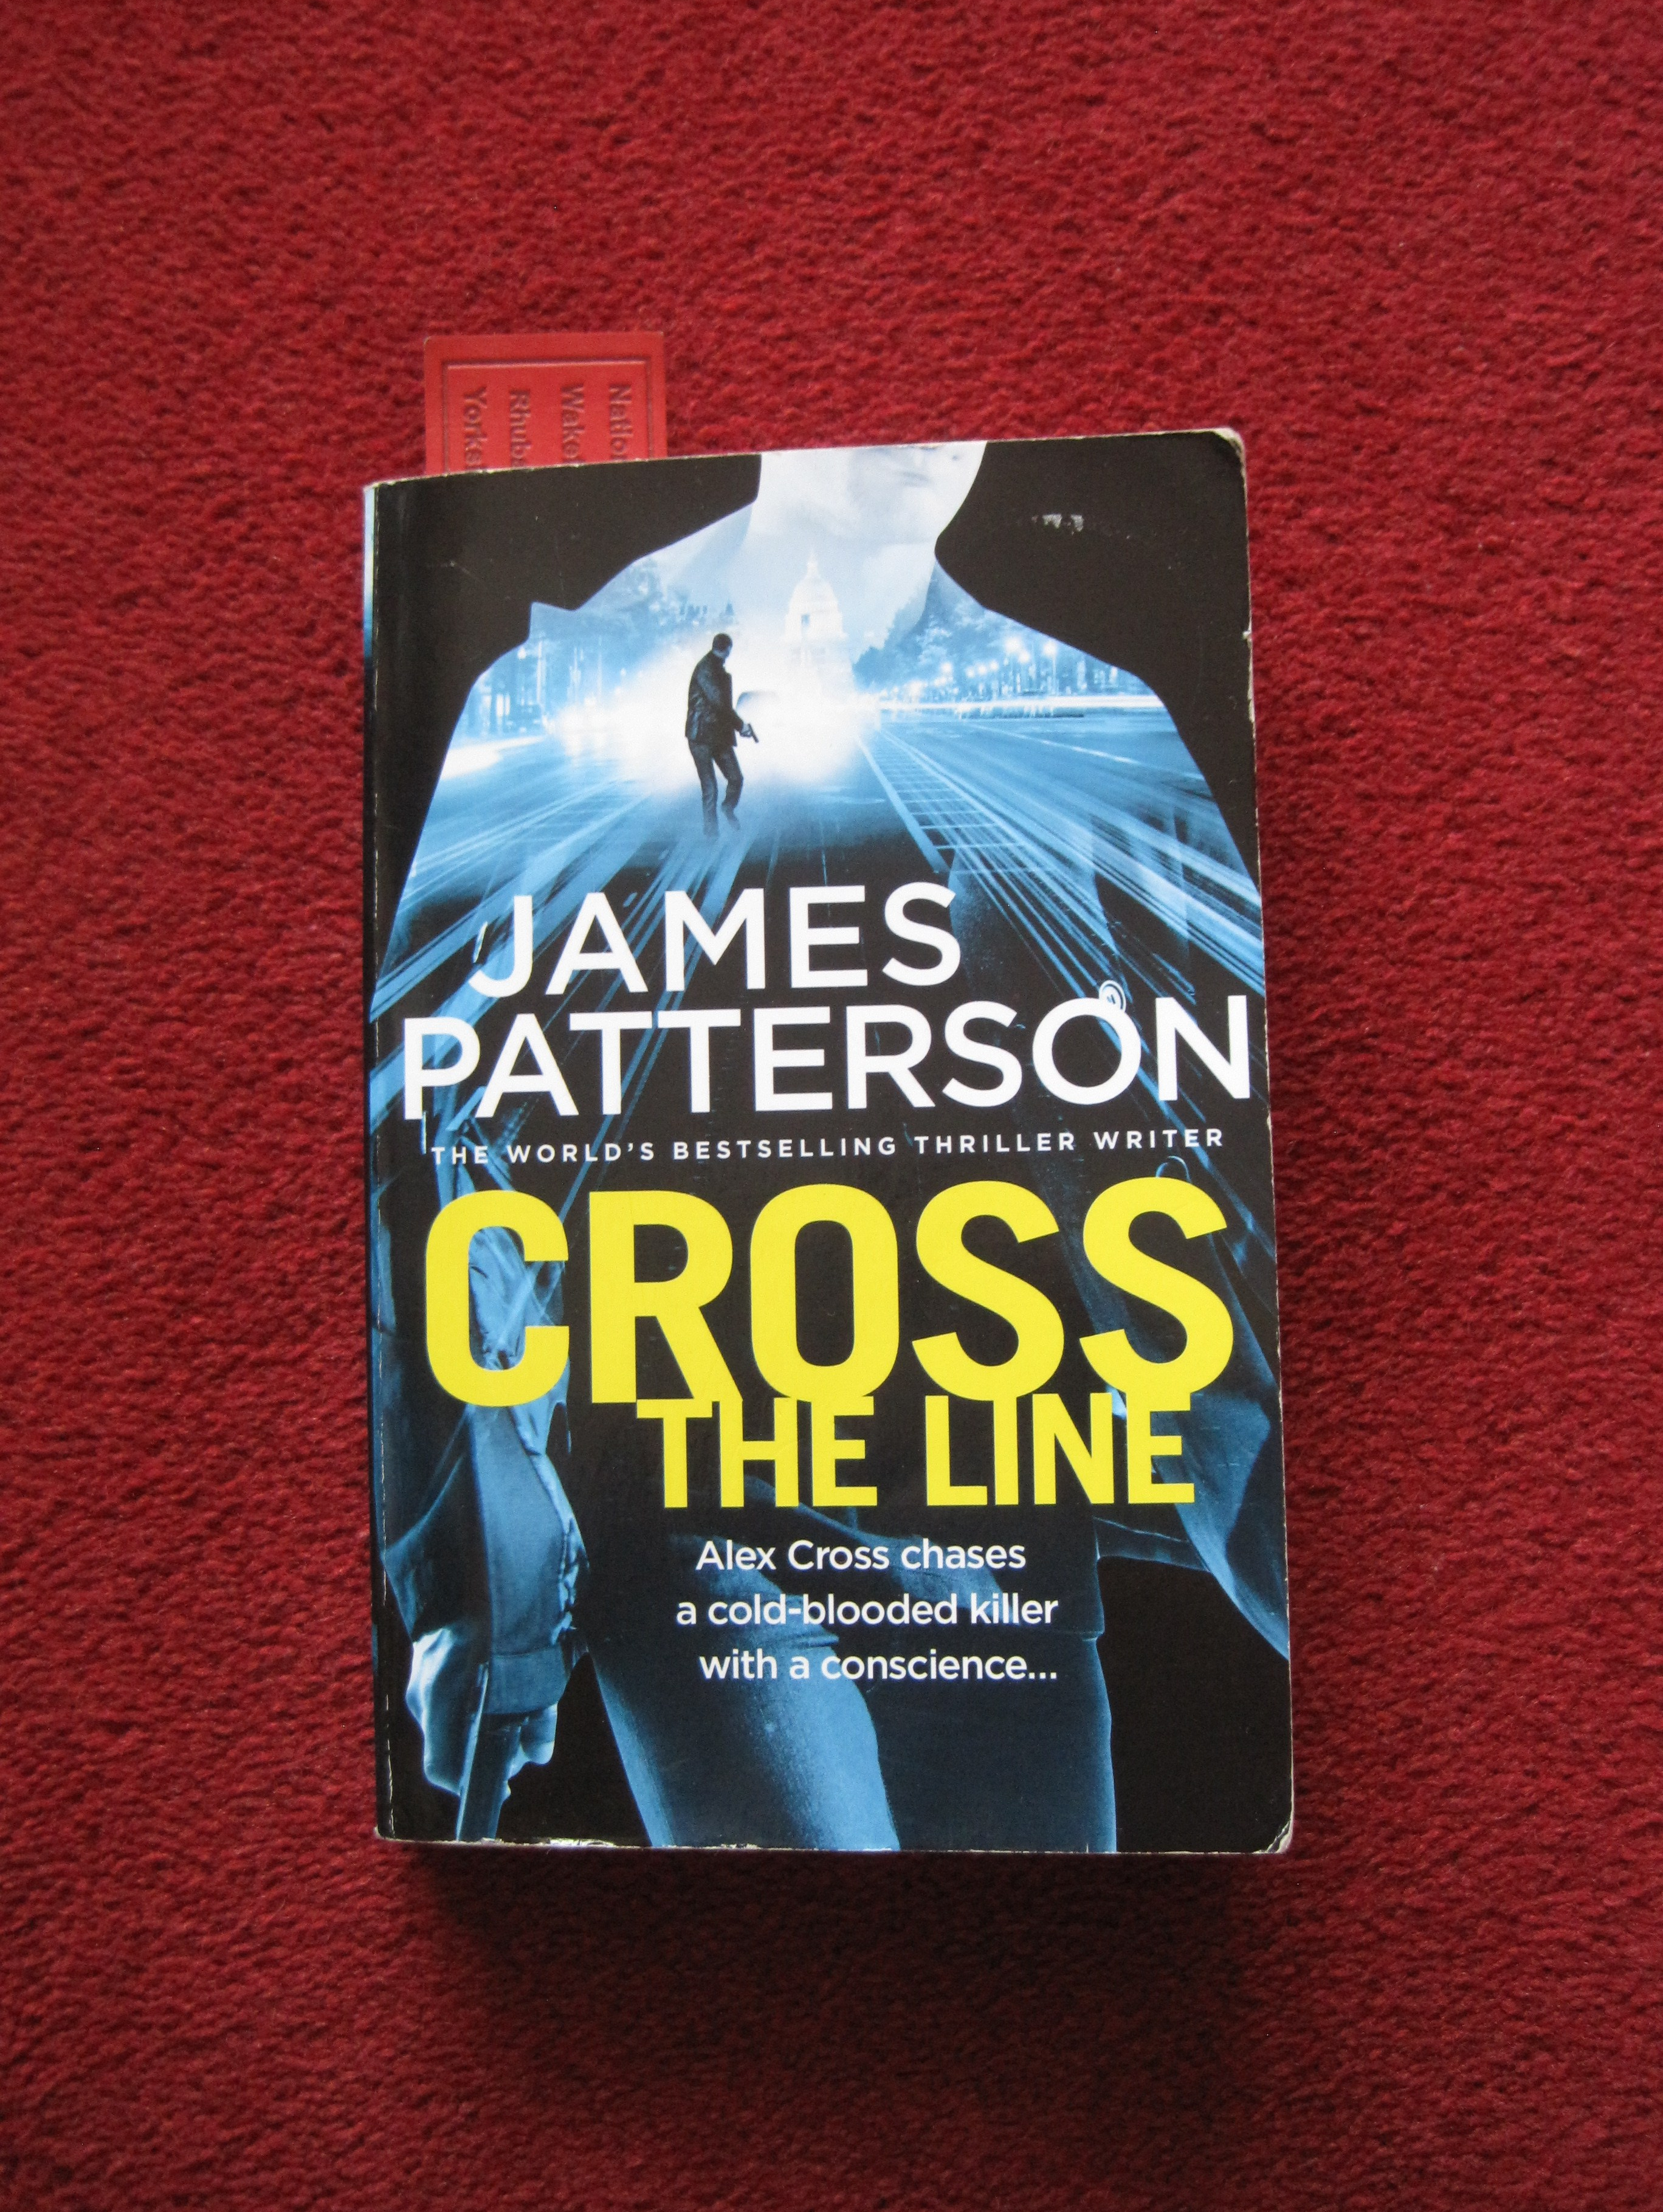 Cross The Line - photo by Juliamaud